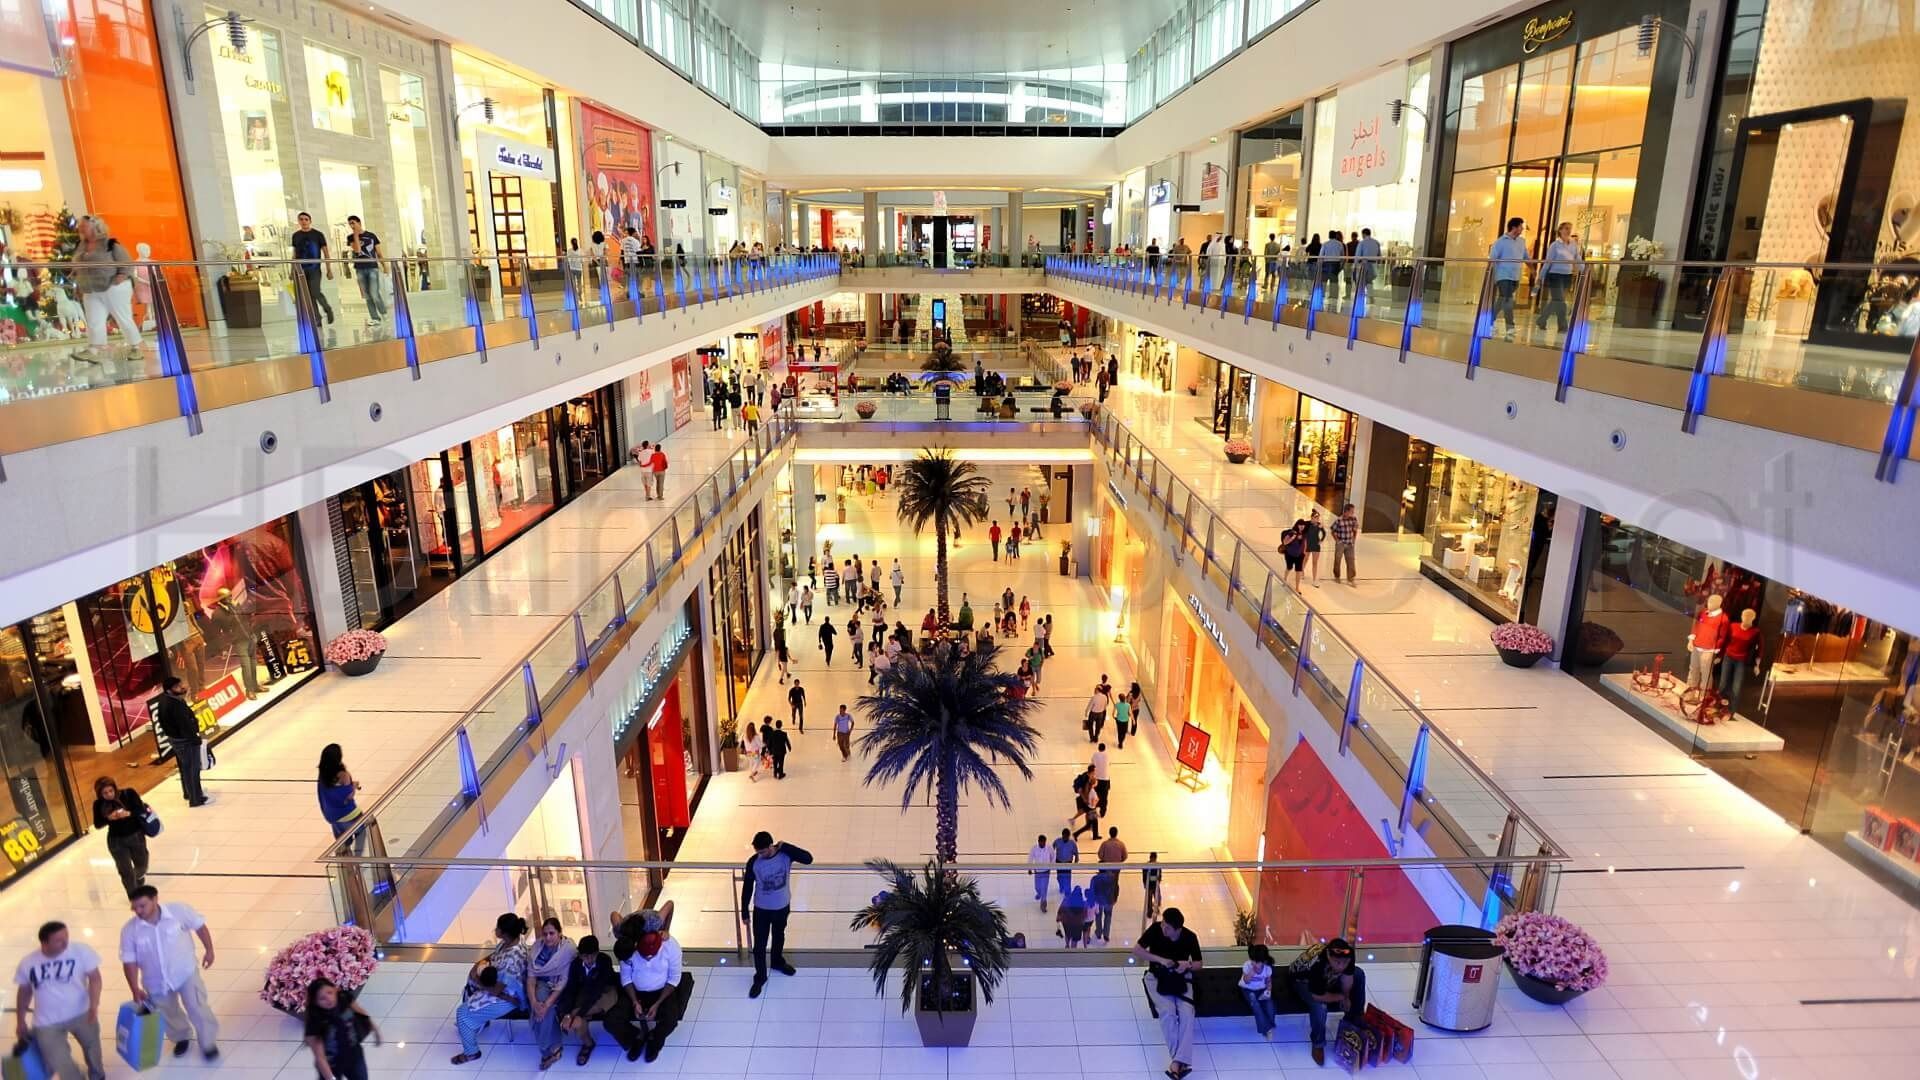 Islamabad Picture. Pics Background HD Wallpaper. Islamabad Photo. Shopping mall interior, Dubai shopping malls, Shopping malls